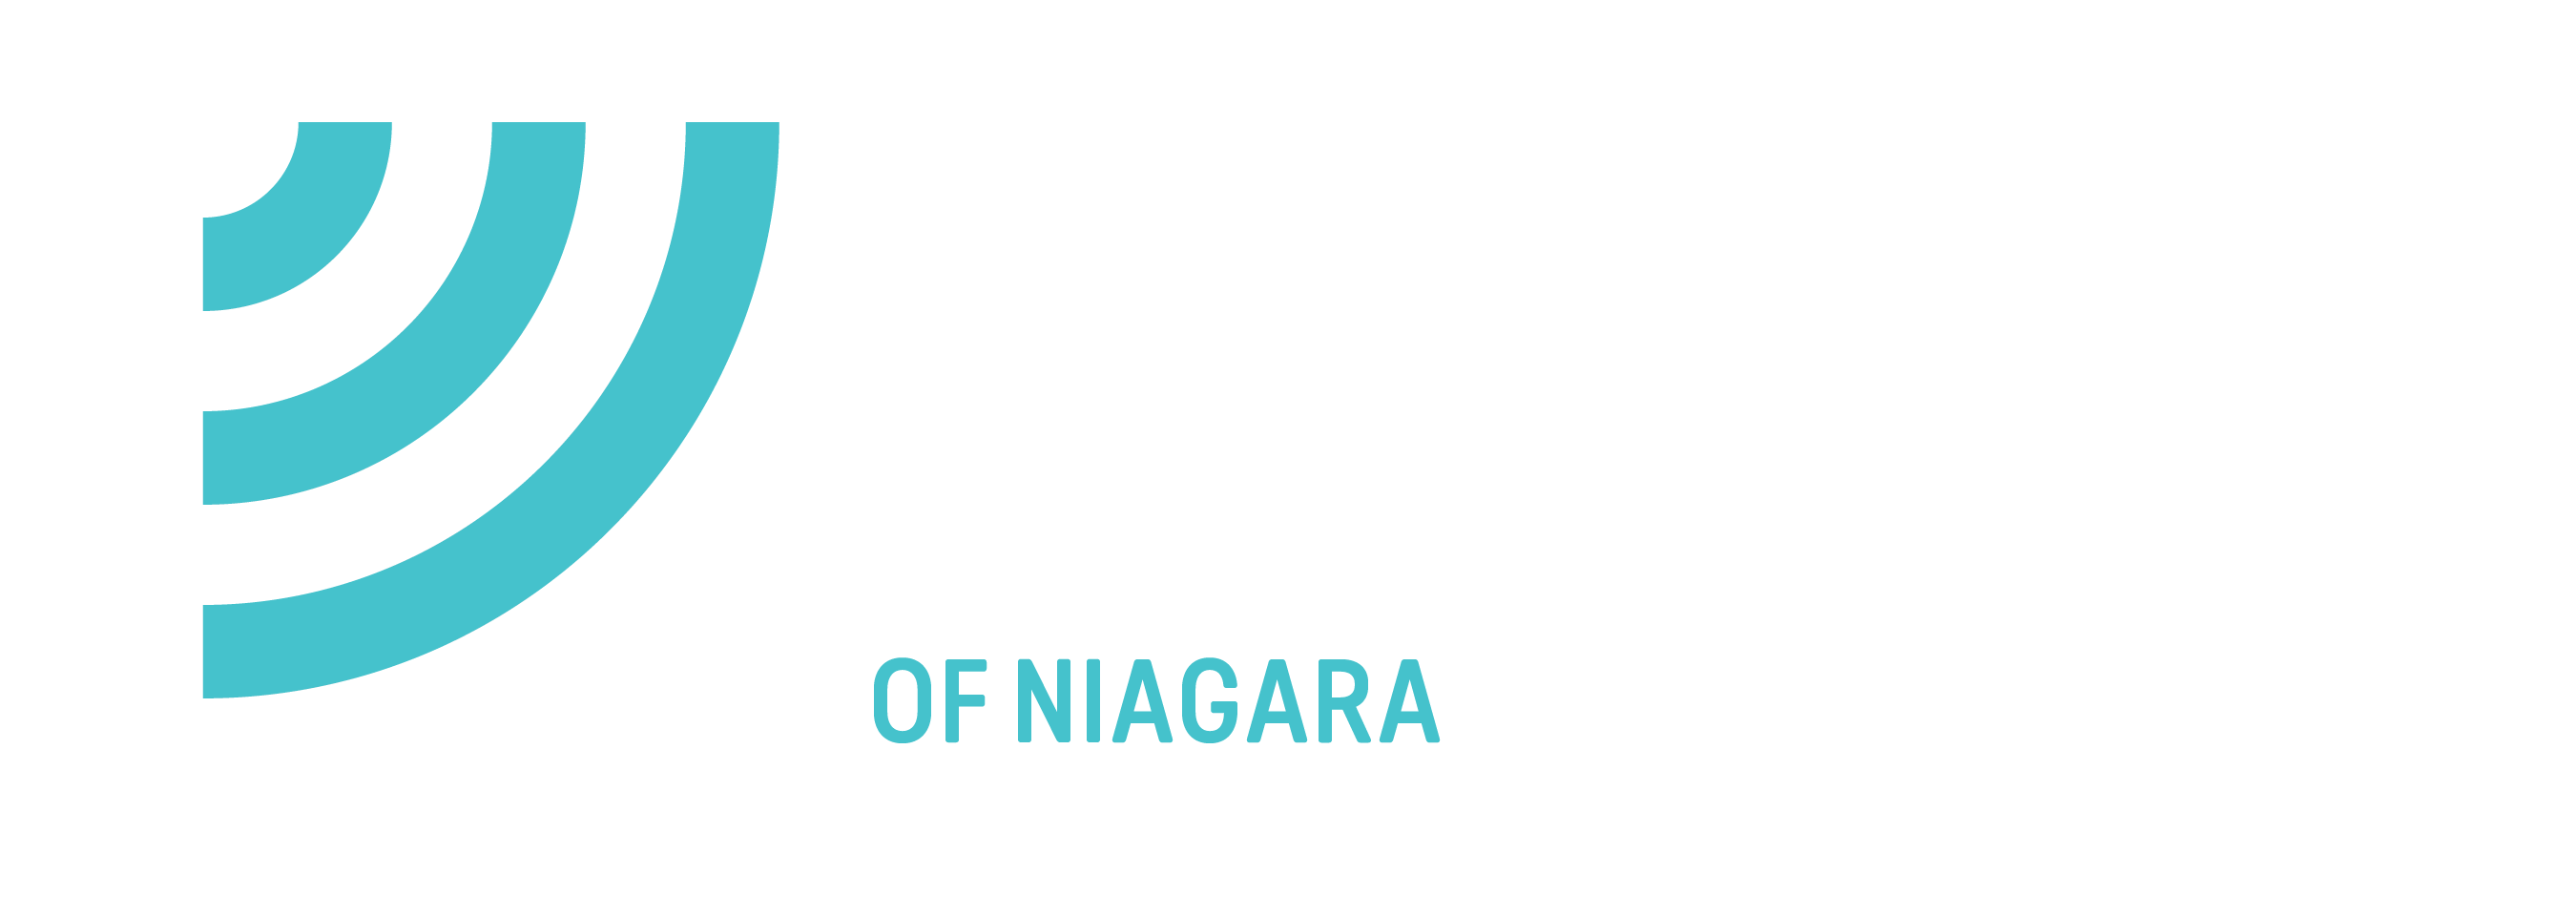 BIG BROTHERS BIG SISTERS NORTH AND WEST NIAGARA ANNOUNCES NEW EXECUTIVE DIRECTOR - Big Brothers Big Sisters of Niagara